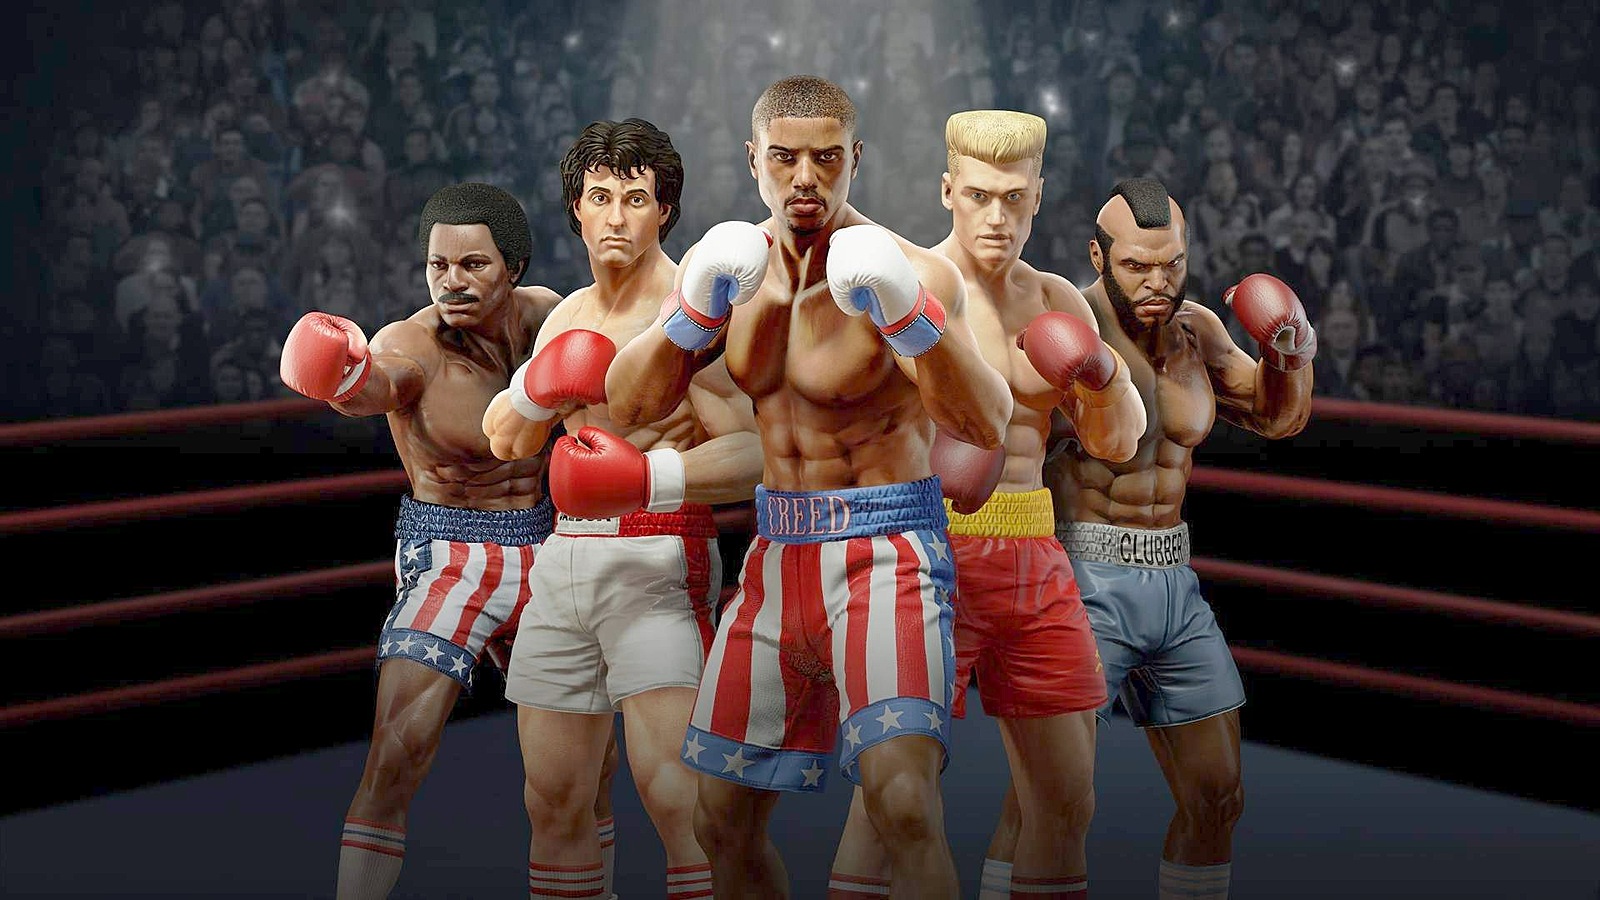 Big Rumble Boxing: Creed Champions – recenze na Bonusweb.cz - iDNES.cz